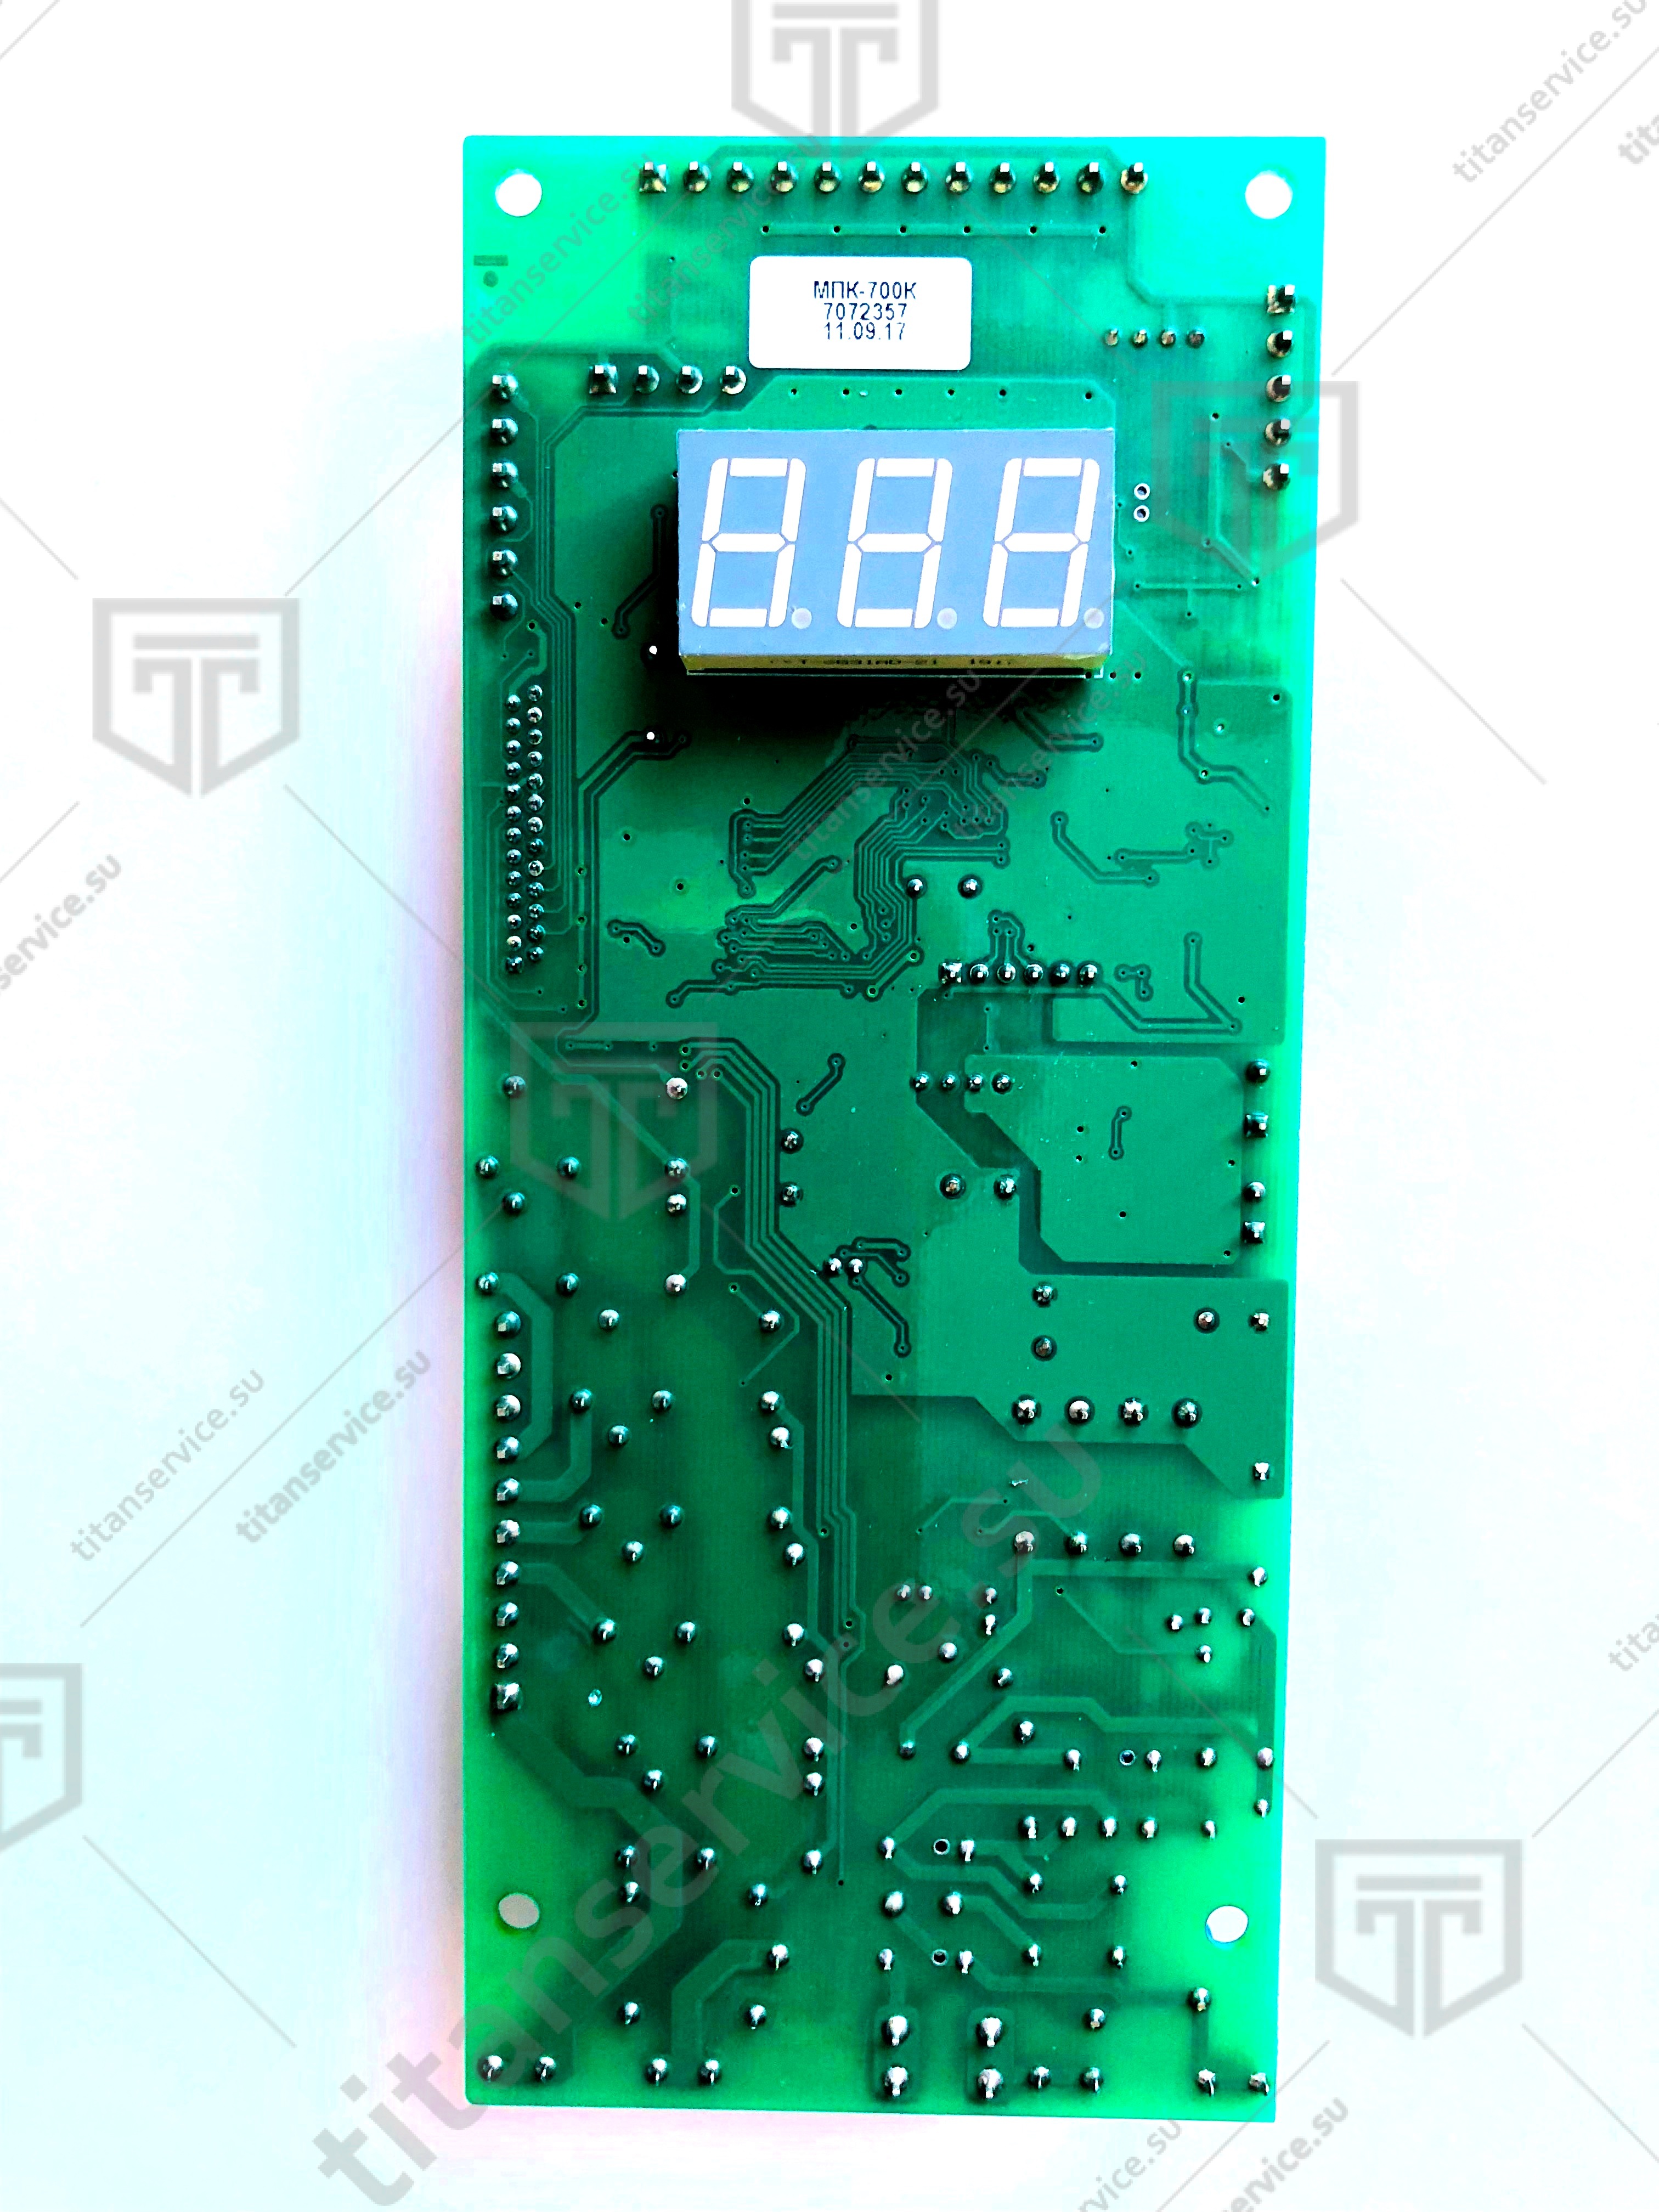 Контроллер МПК-700К (исполнение mpk700k_355) - фото №1